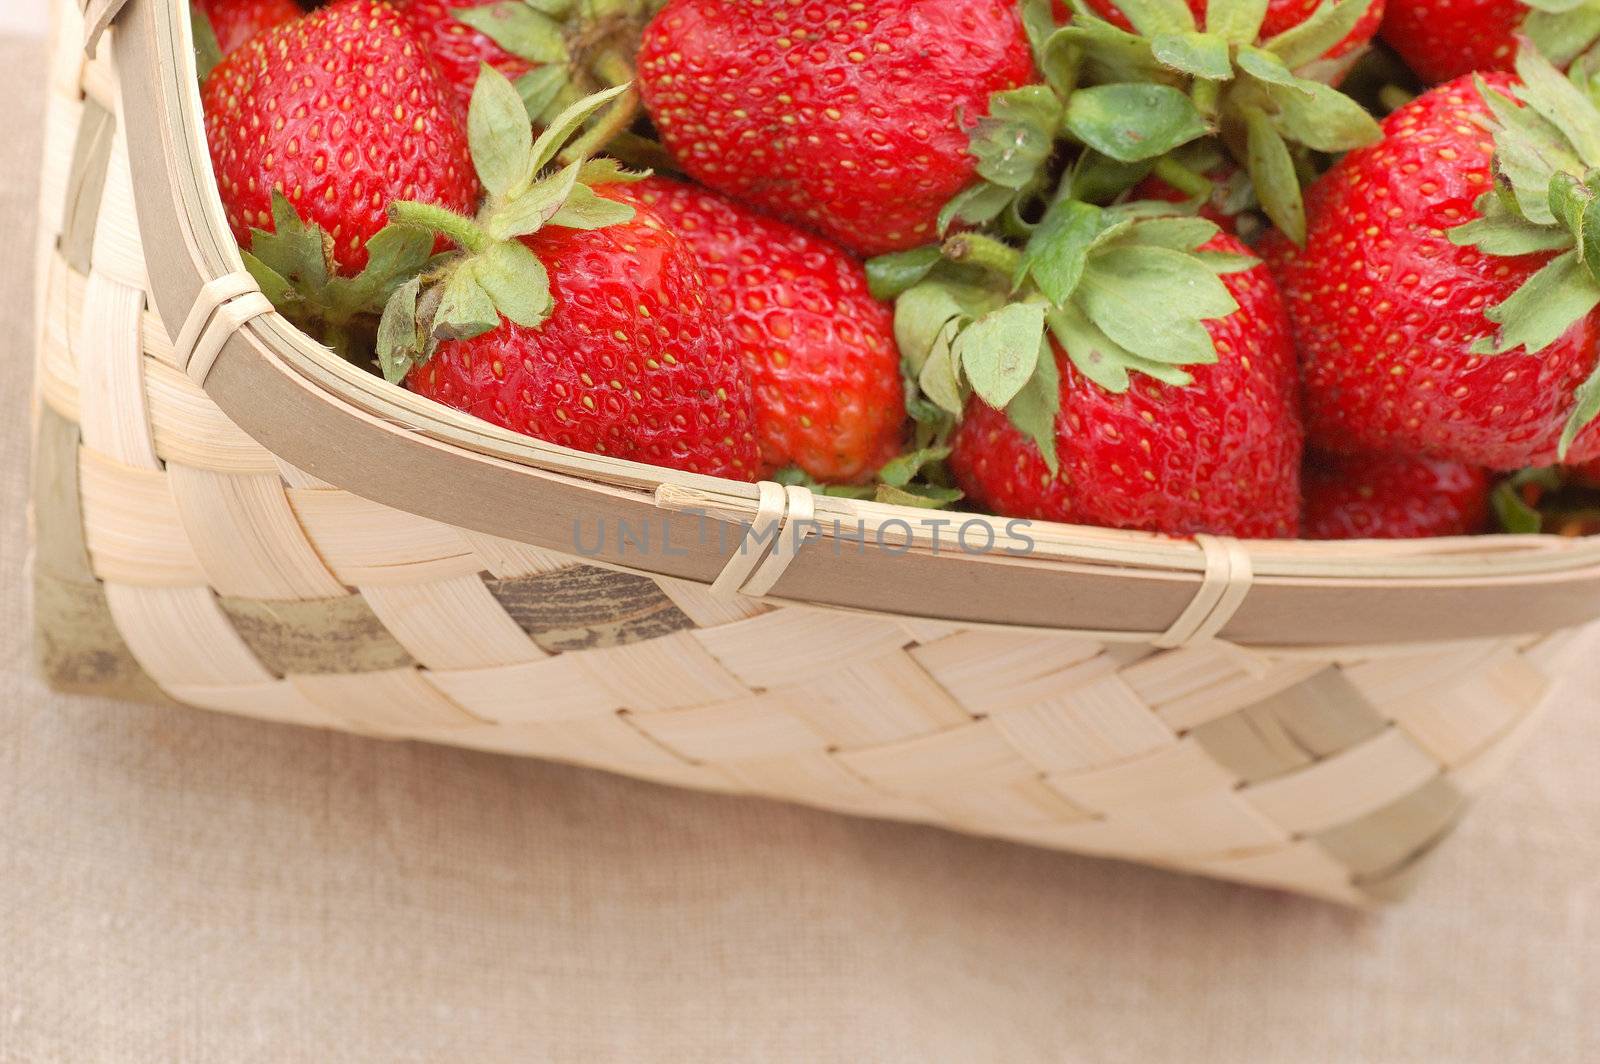 strawberries by pmaks